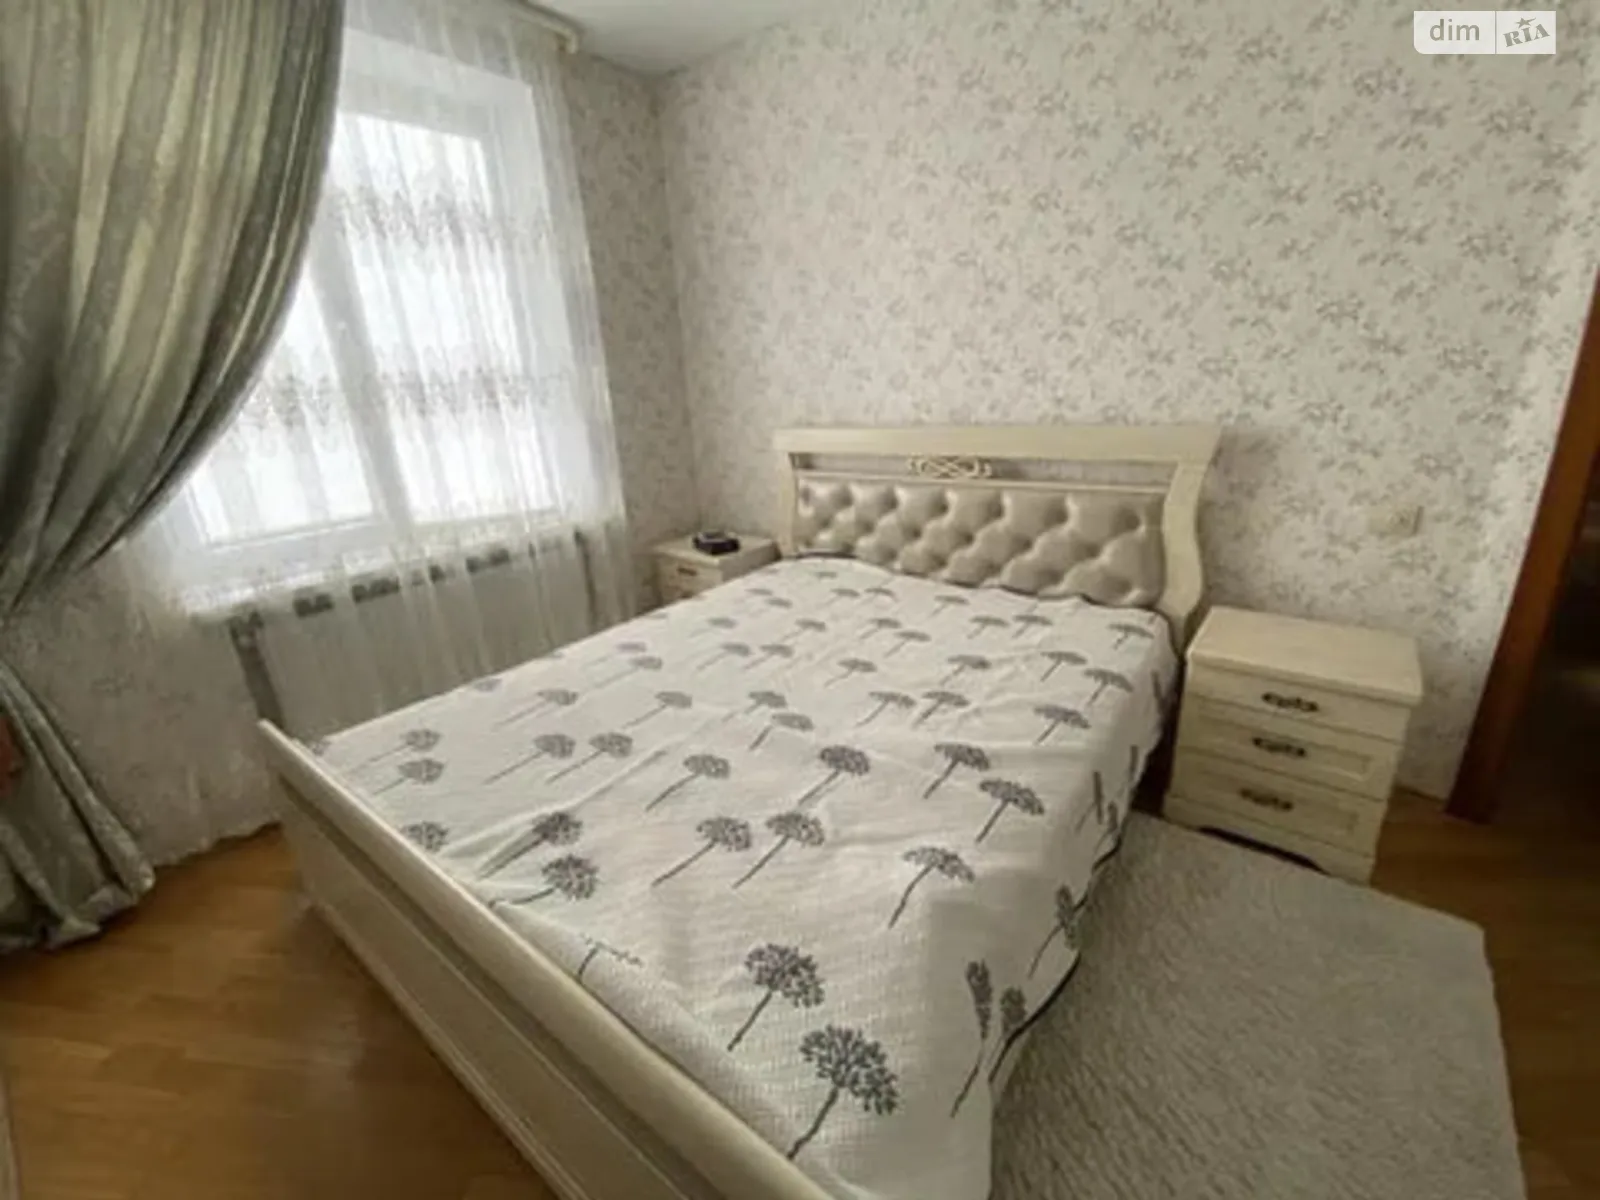 Сдается в аренду 2-комнатная квартира 52 кв. м в Киеве, ул. Академика Доброхотова, 11А